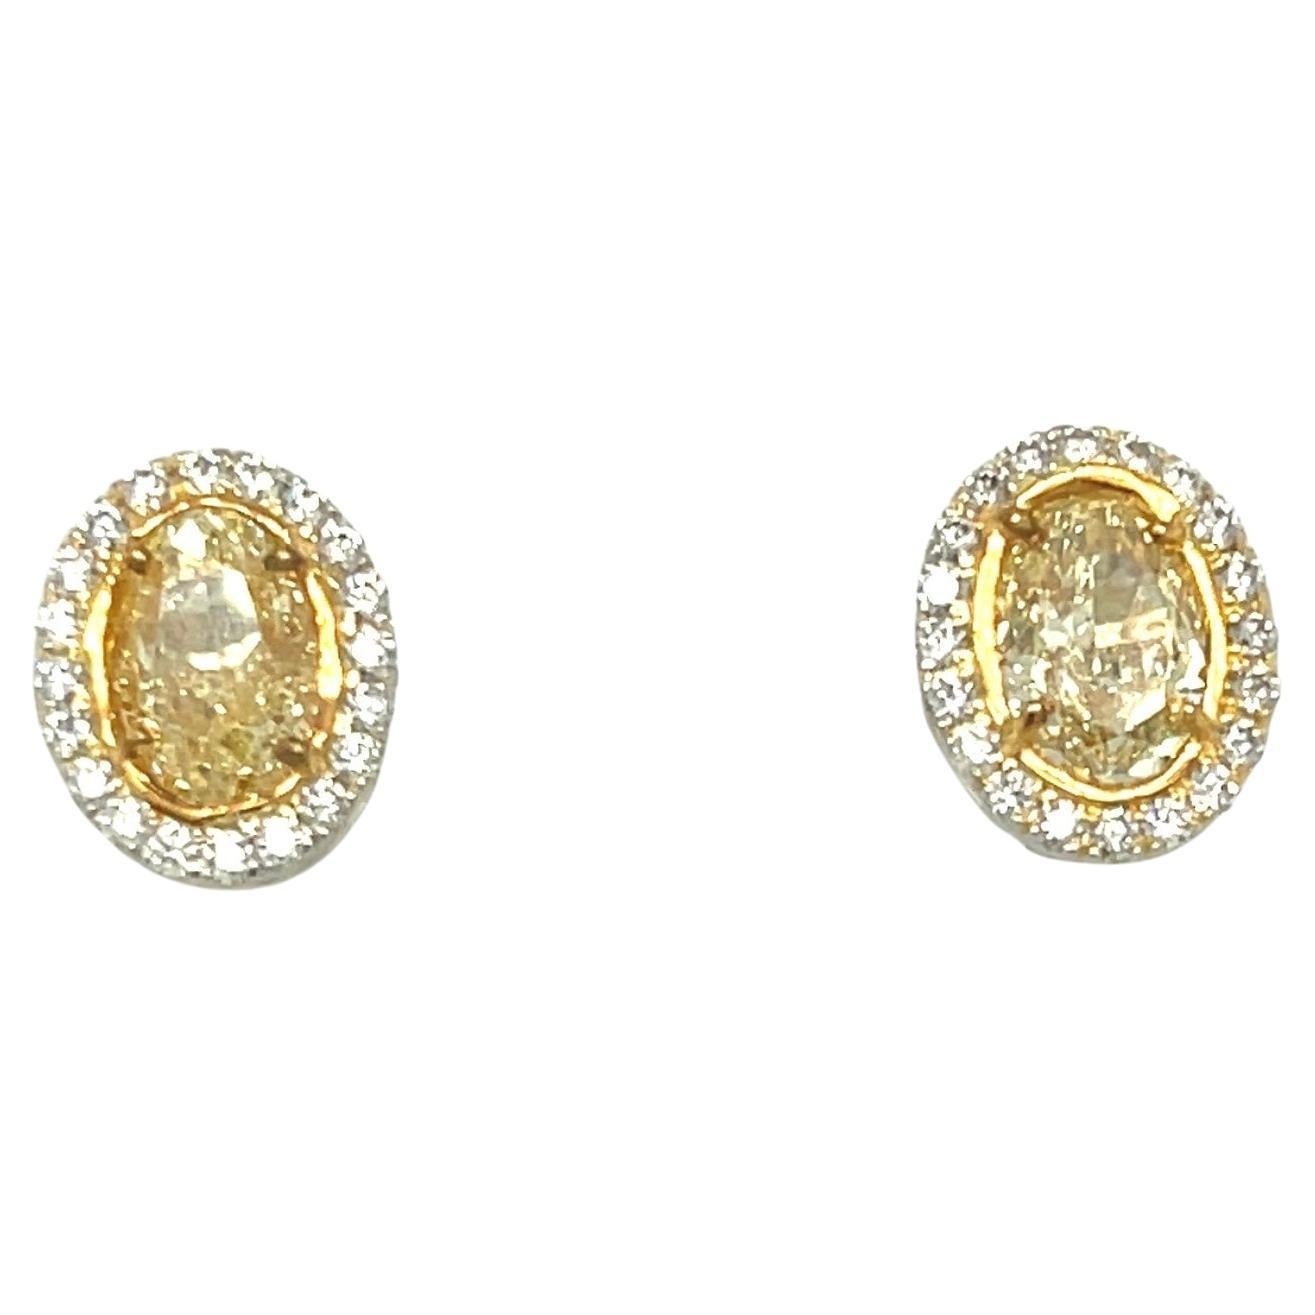 Oval Yellow Diamond Earrings 3.13 Carats GIA Certified Platinum / 18 KYG